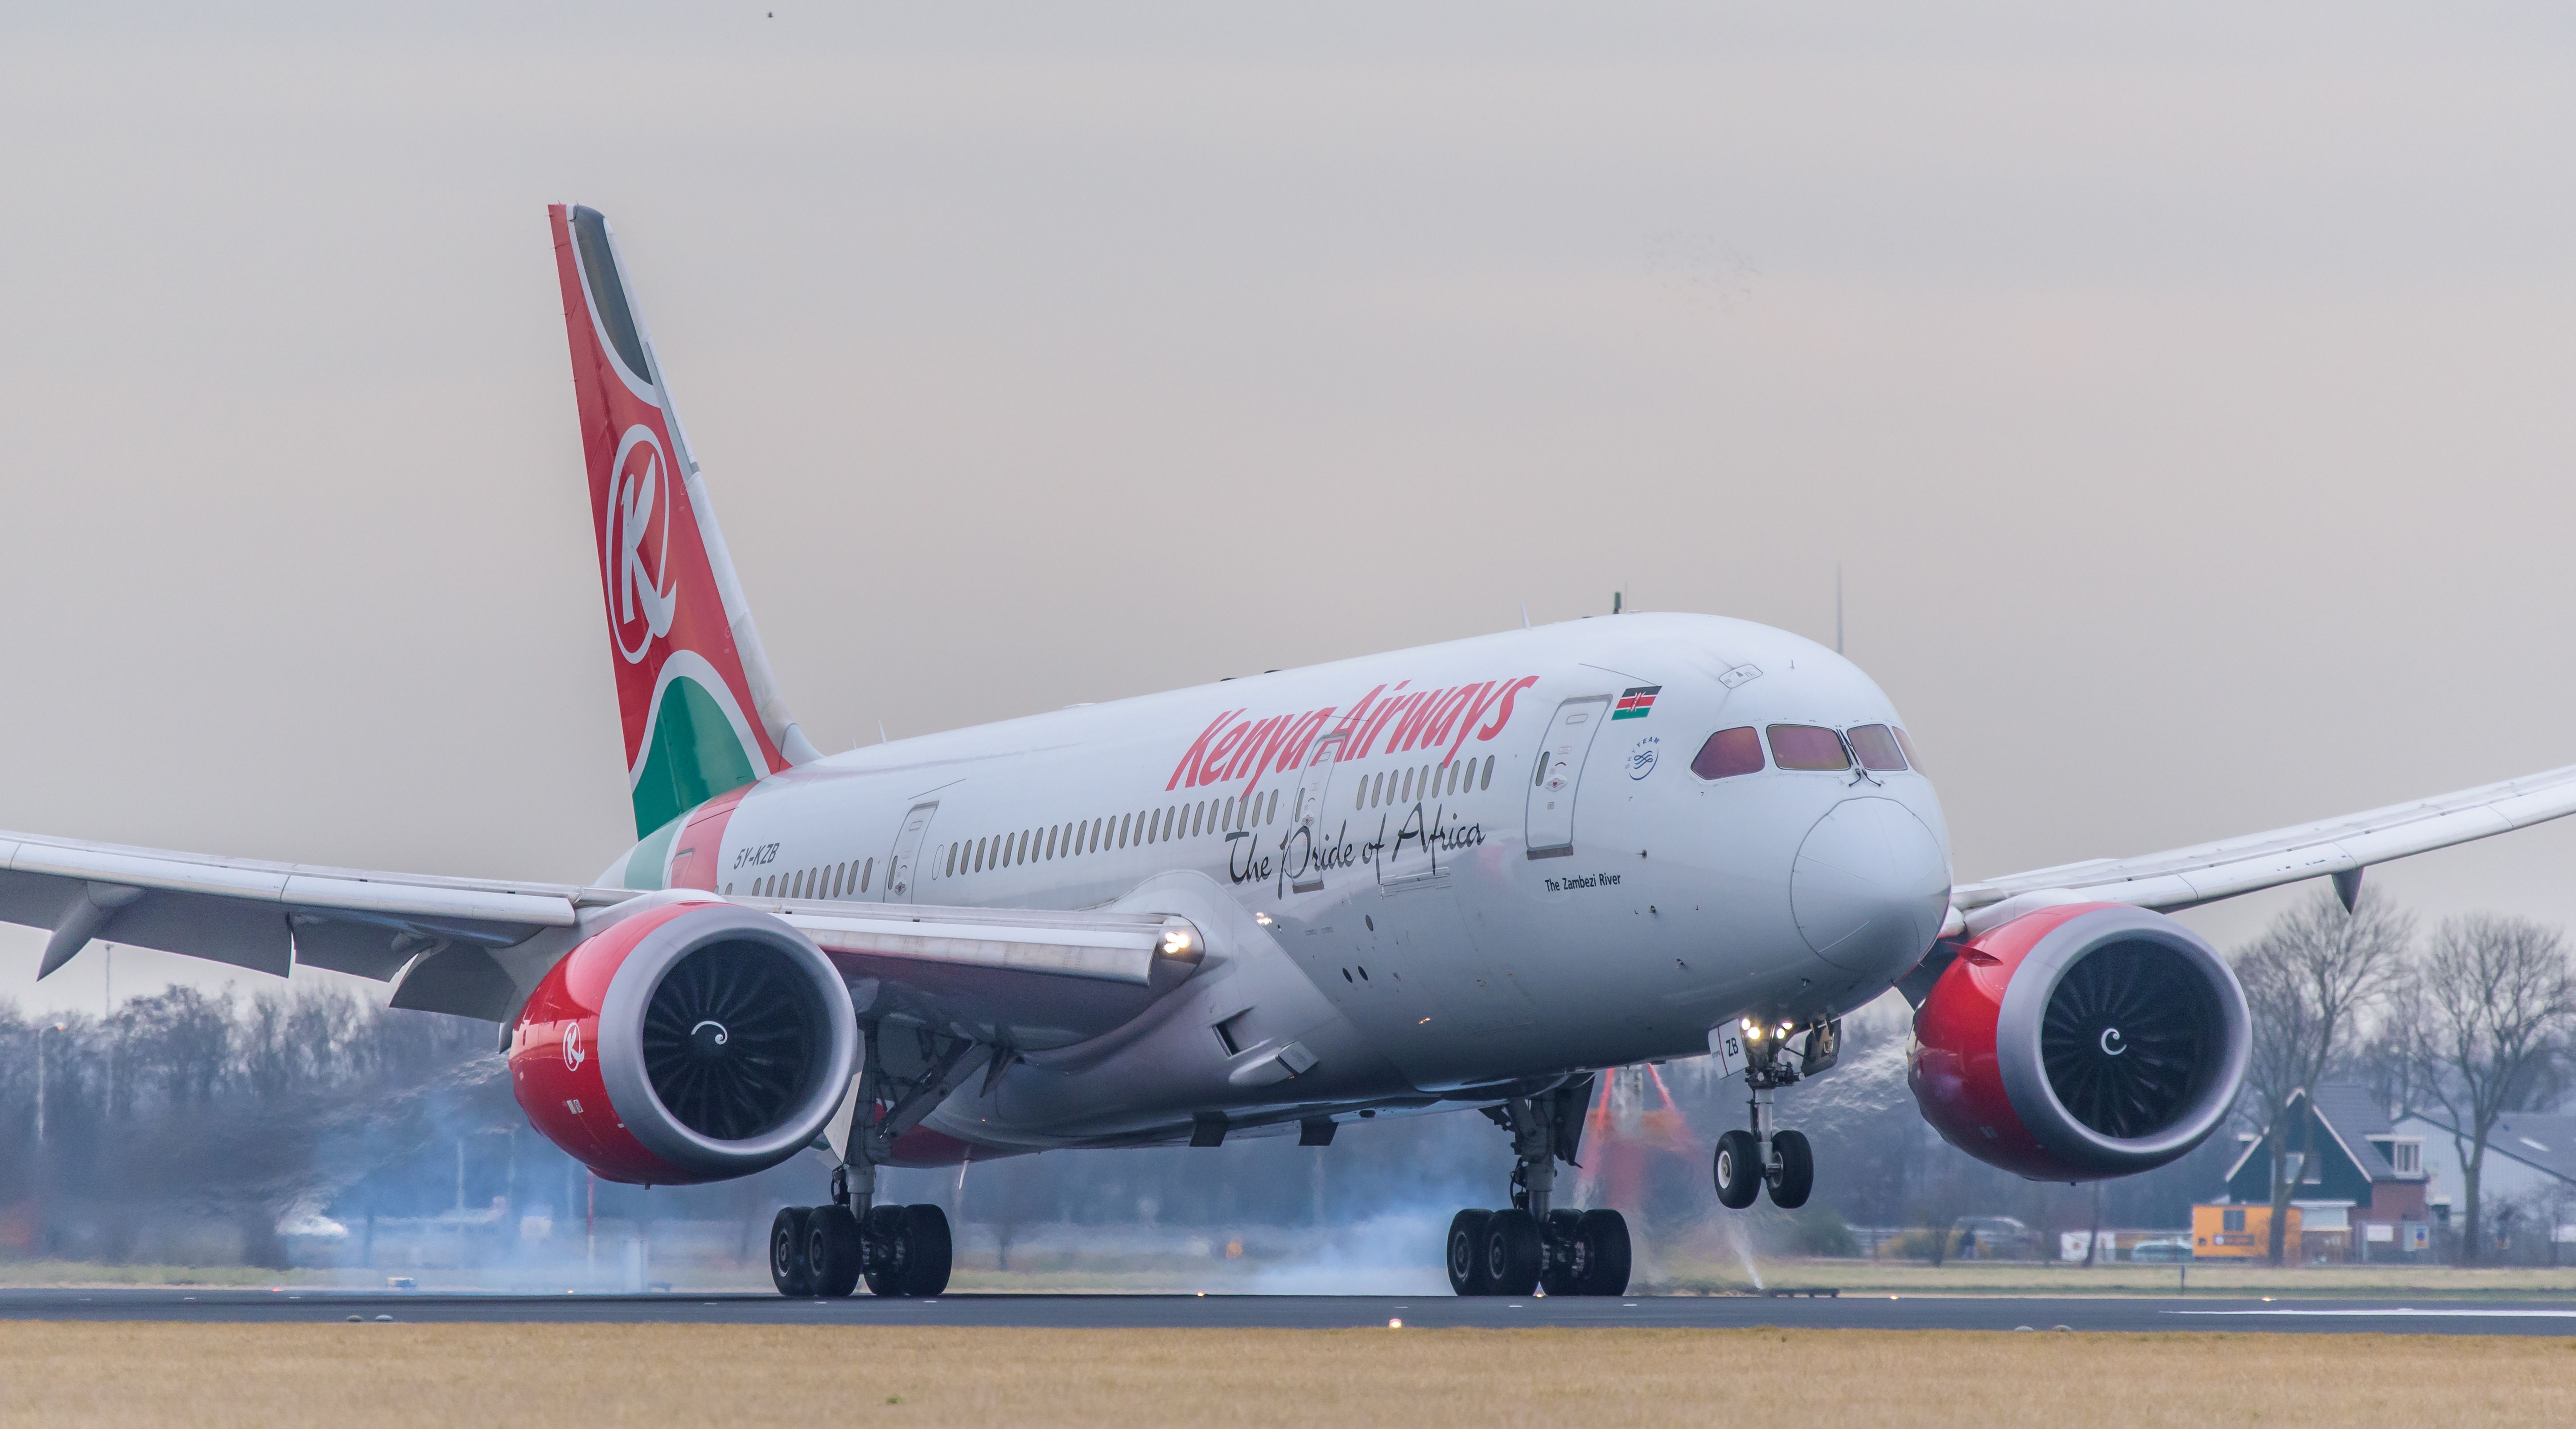 A Kenya Airways aircraft landing at Schiphol Airport.